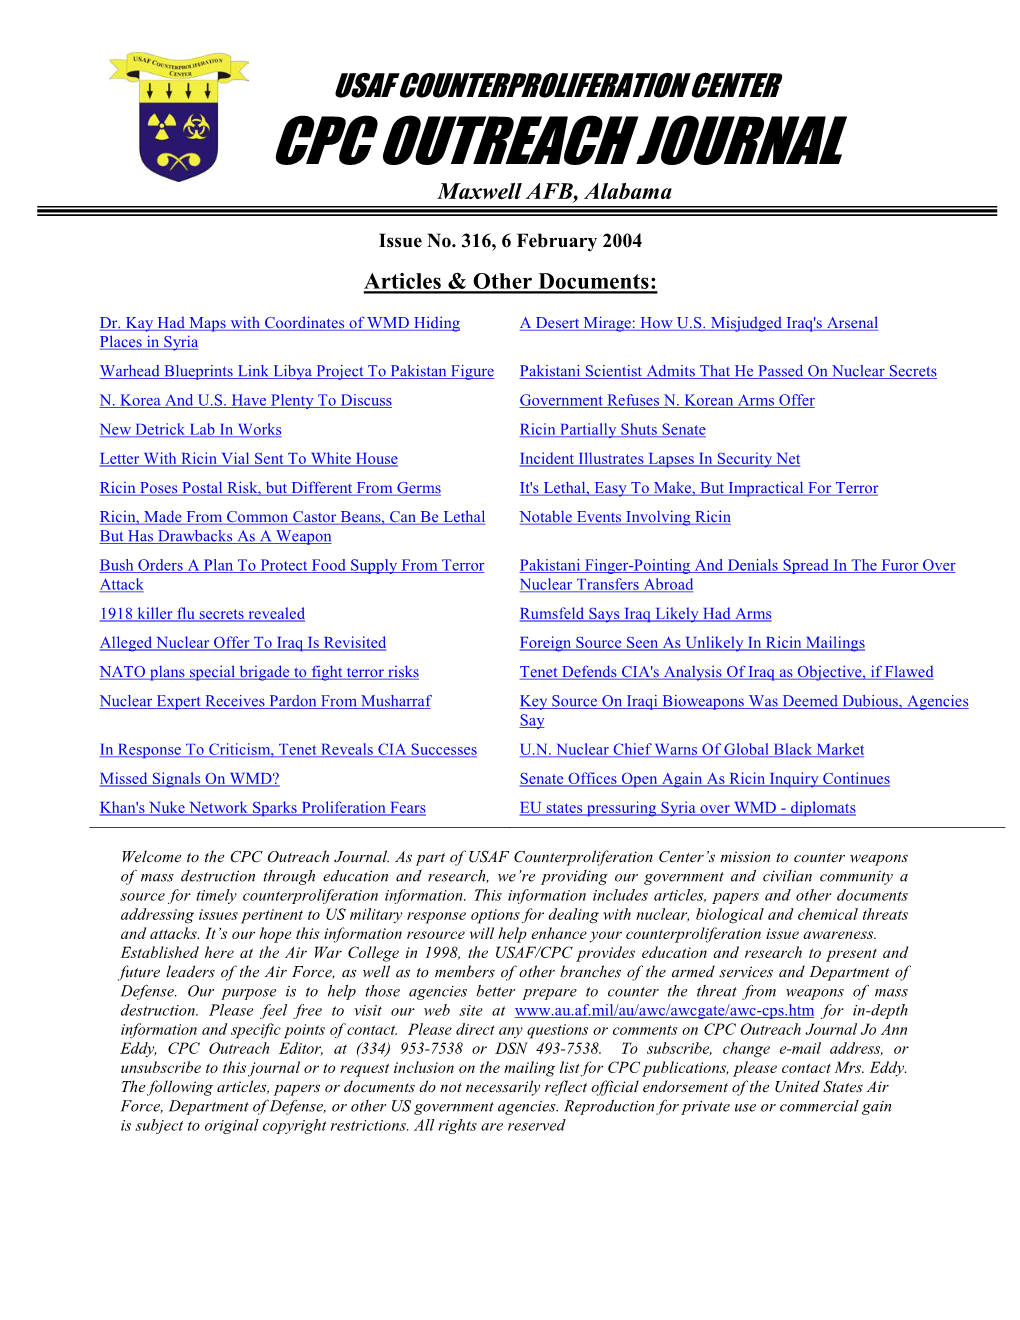 USAF Counterproliferation Center CPC Outreach Journal #316